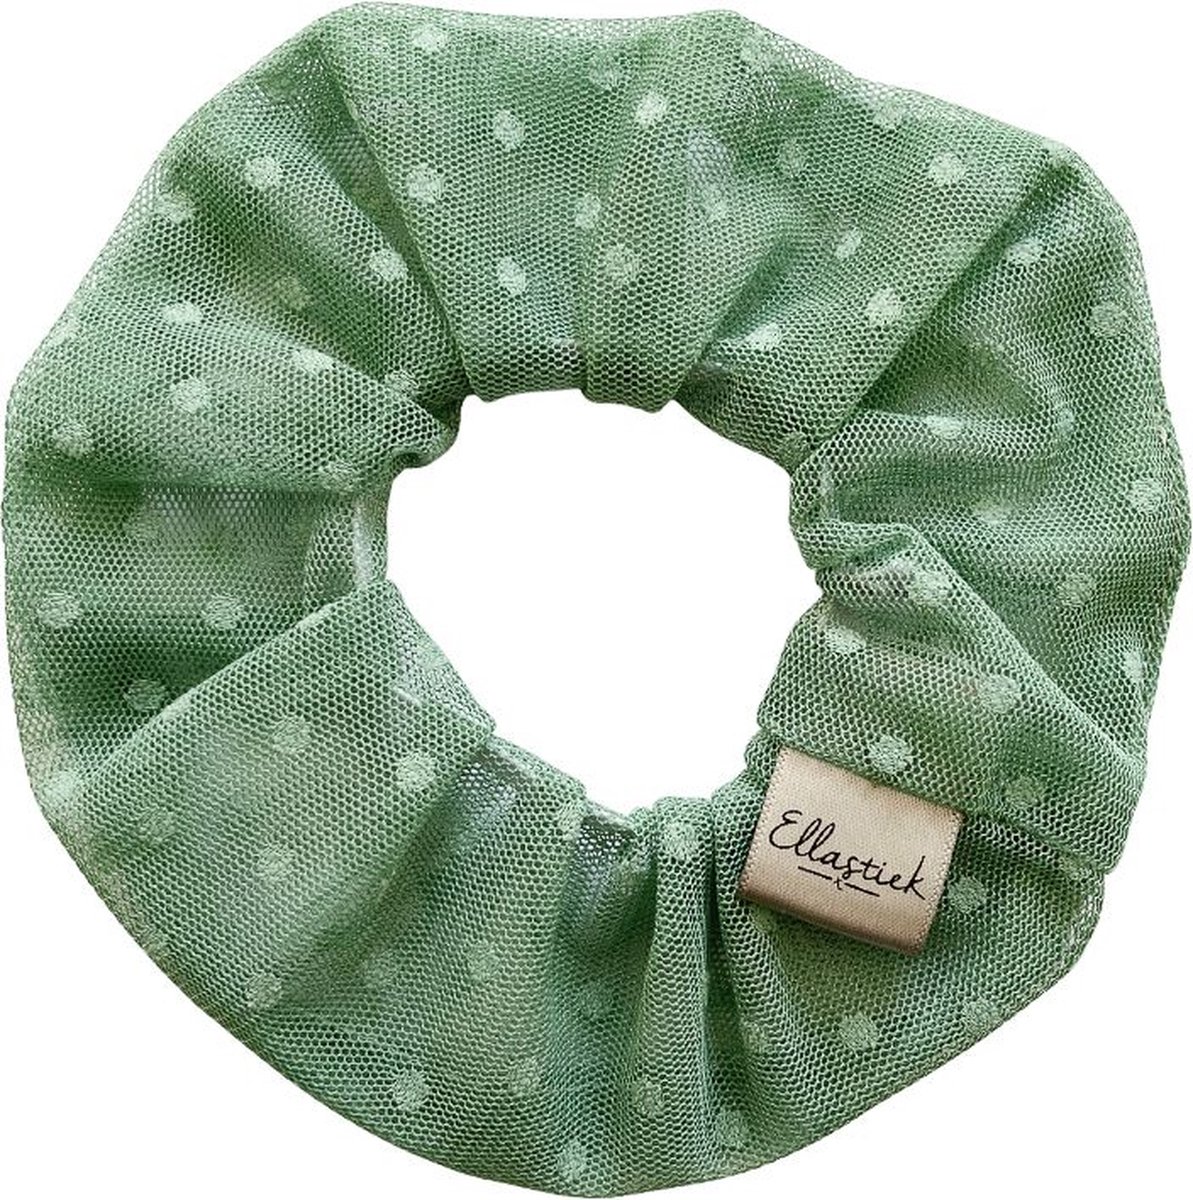 Ellastiek scrunchie groene stipjes - haarelastiekjes - haar accessoire - luxe uitstraling en kwaliteit- Handmade in Amsterdam